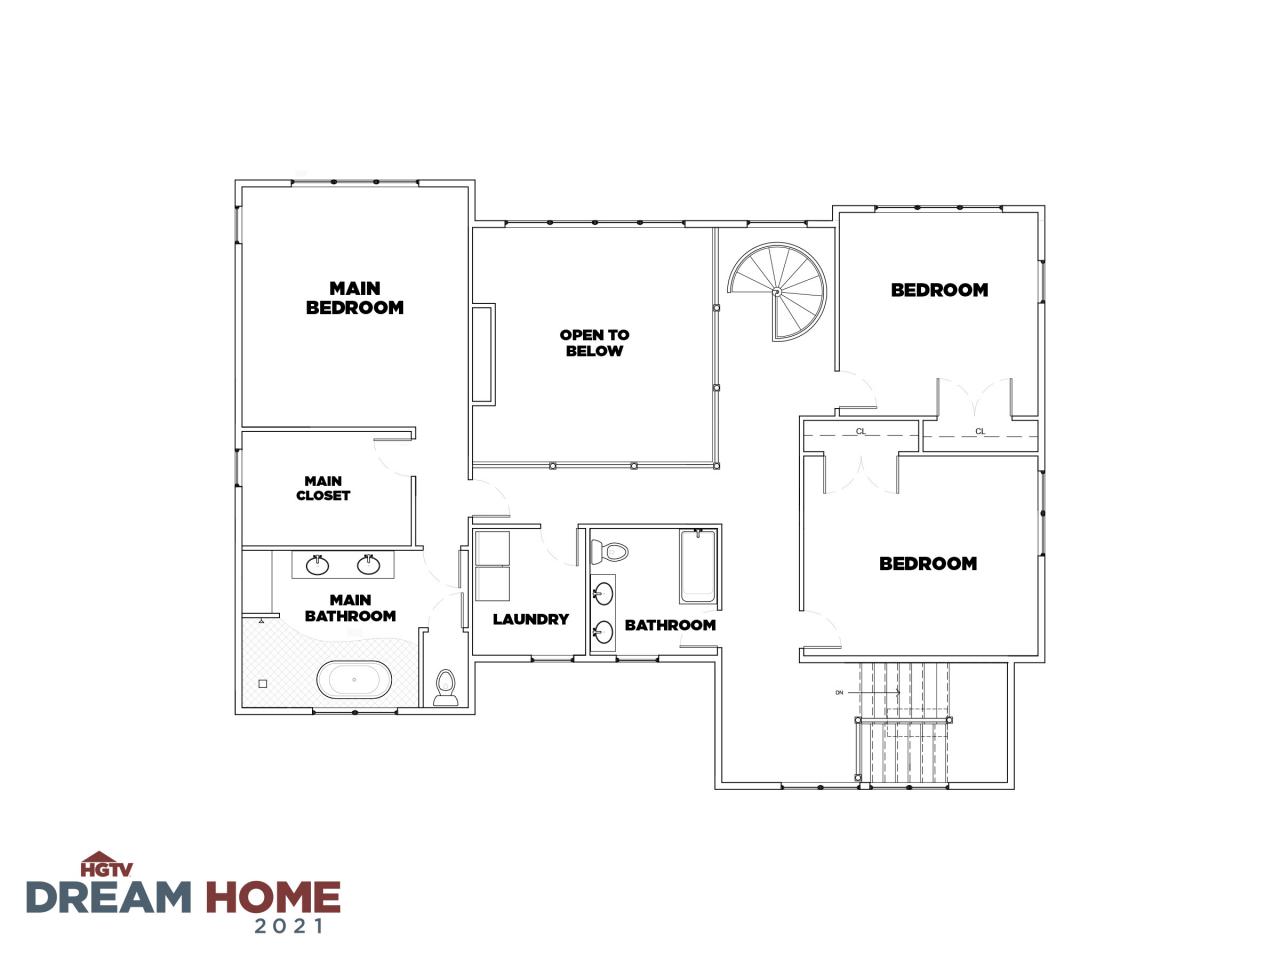 Discover the Floor Plan for HGTV Dream Home 2021 HGTV Dream Home 2021